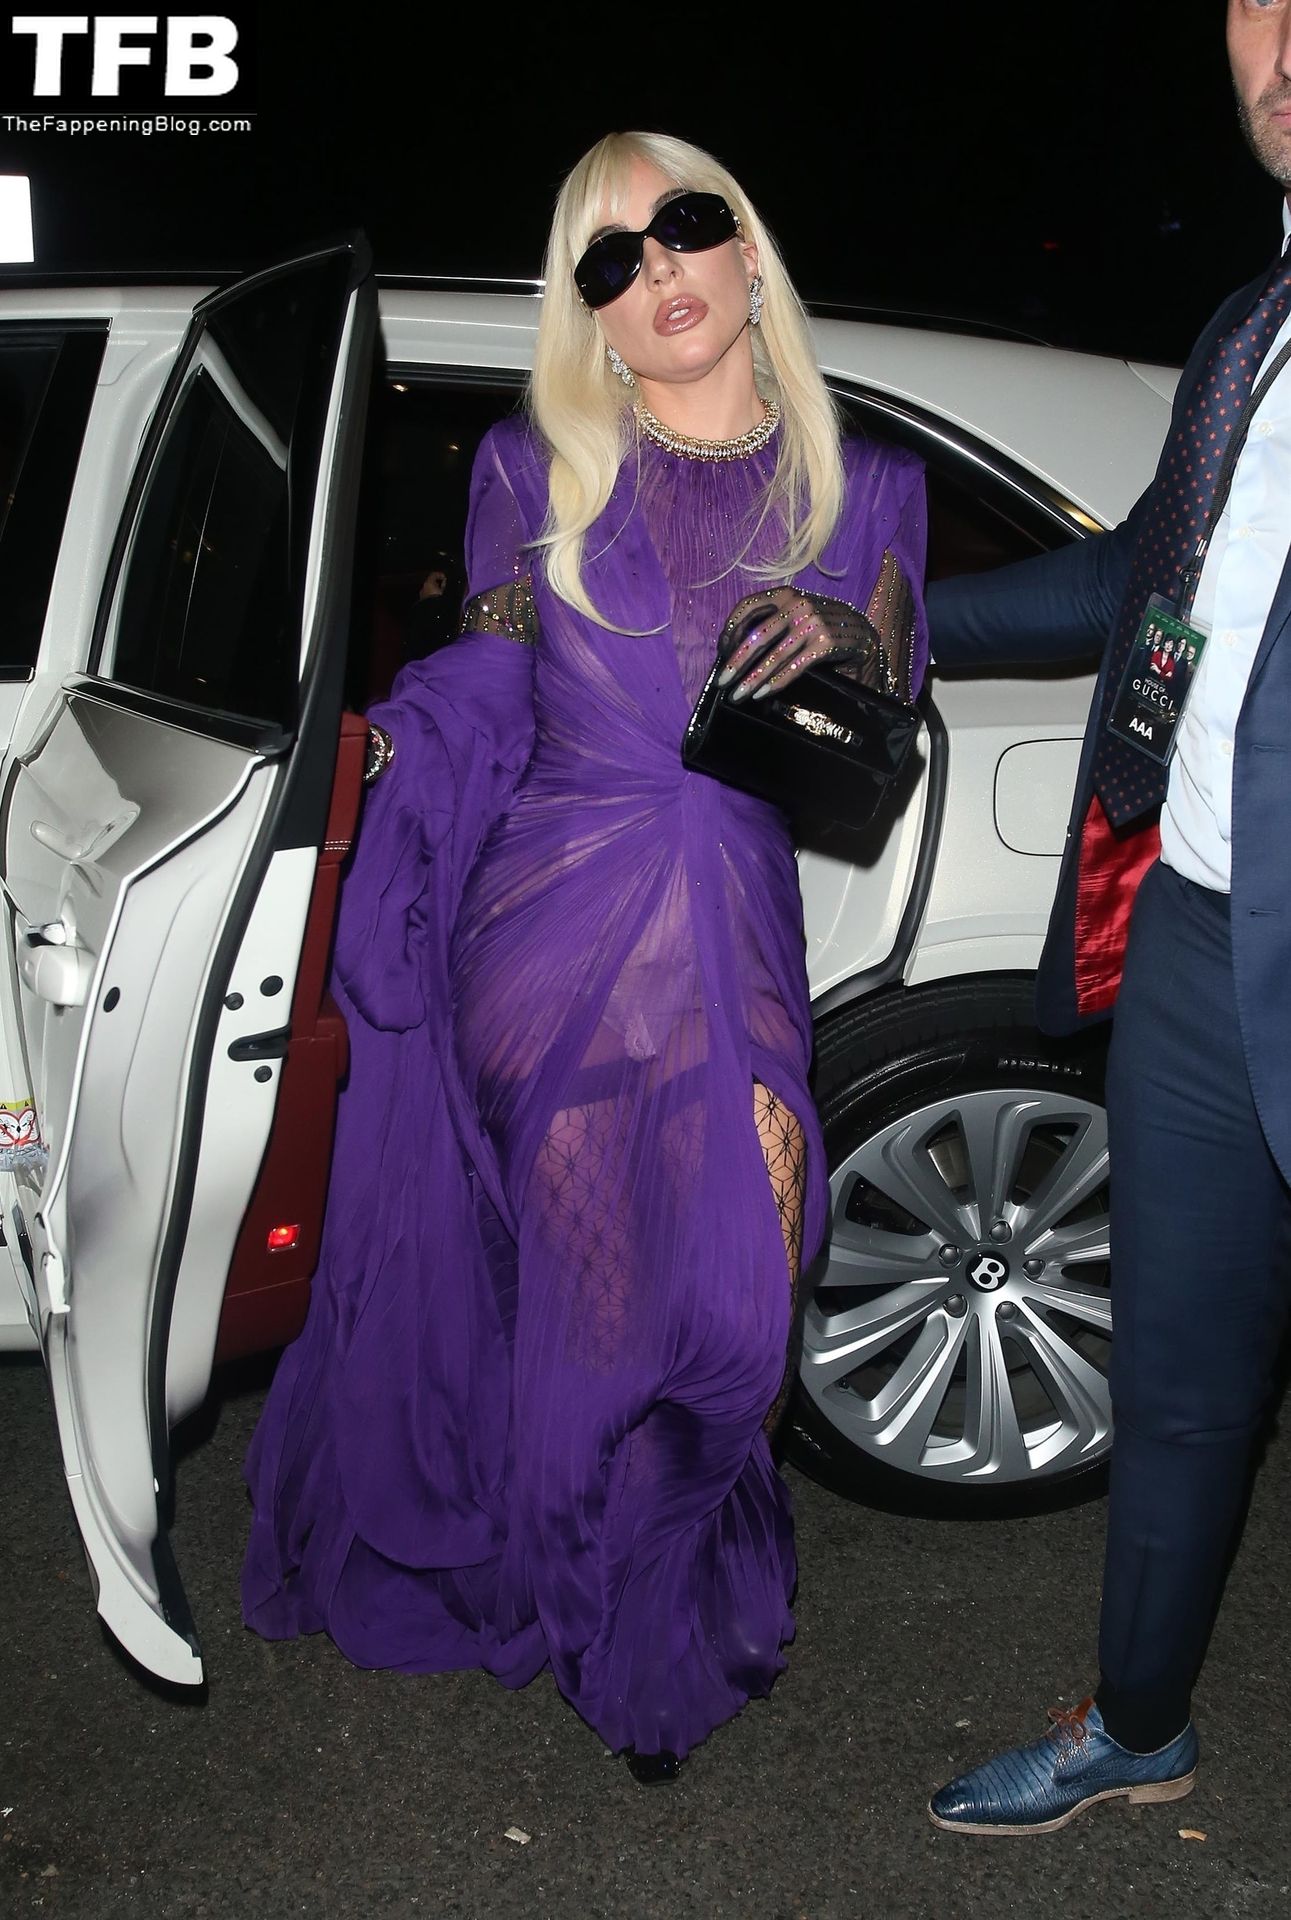 Lady-Gaga-Sexy-The-Fappening-Blog-27.jpg